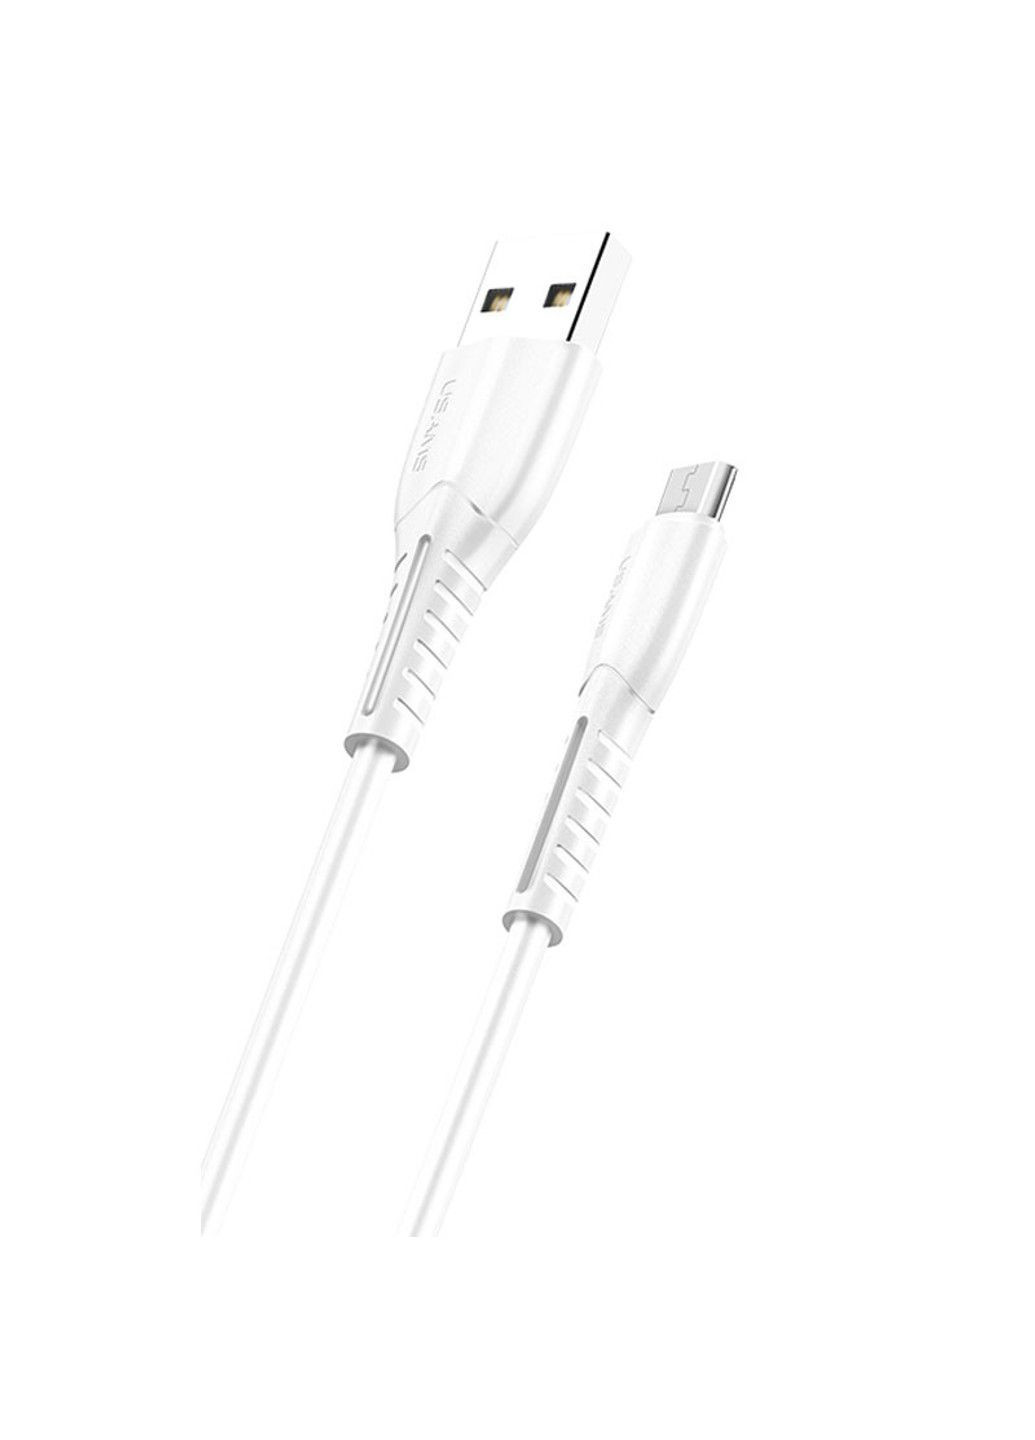 Дата кабель US-SJ365 U35 USB to MicroUSB (1m) USAMS (291880831)